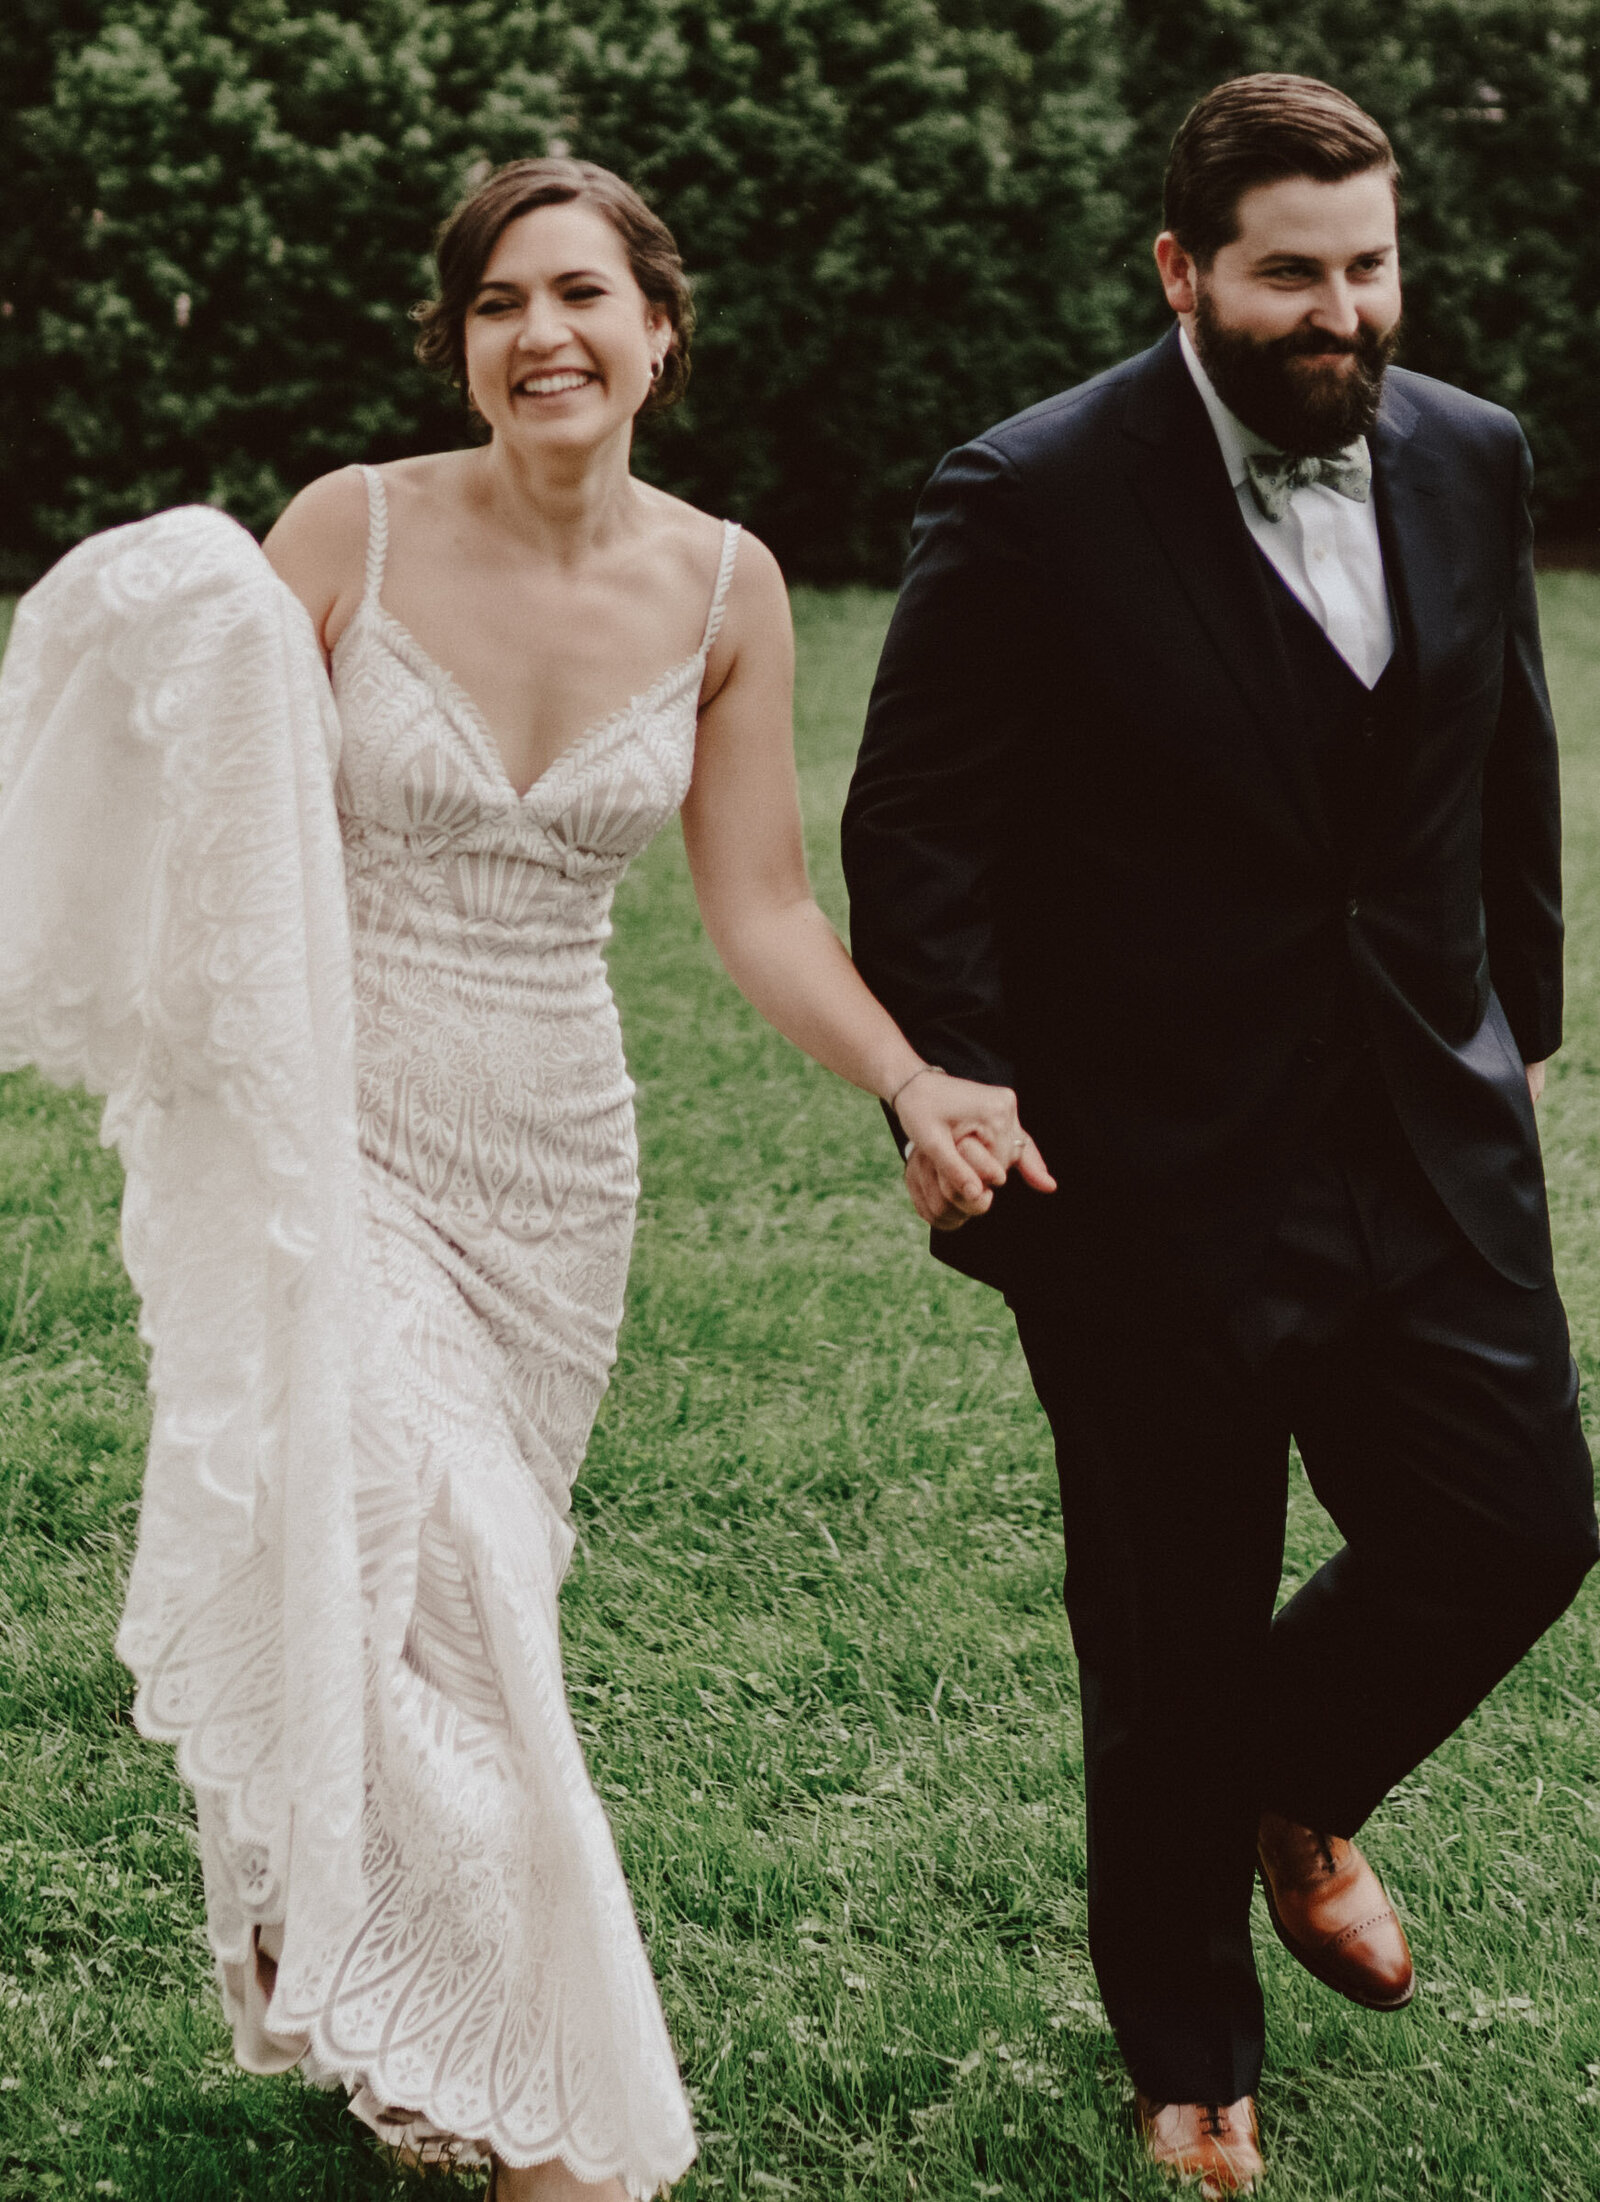 A smiling bride and groom walk through a backyard